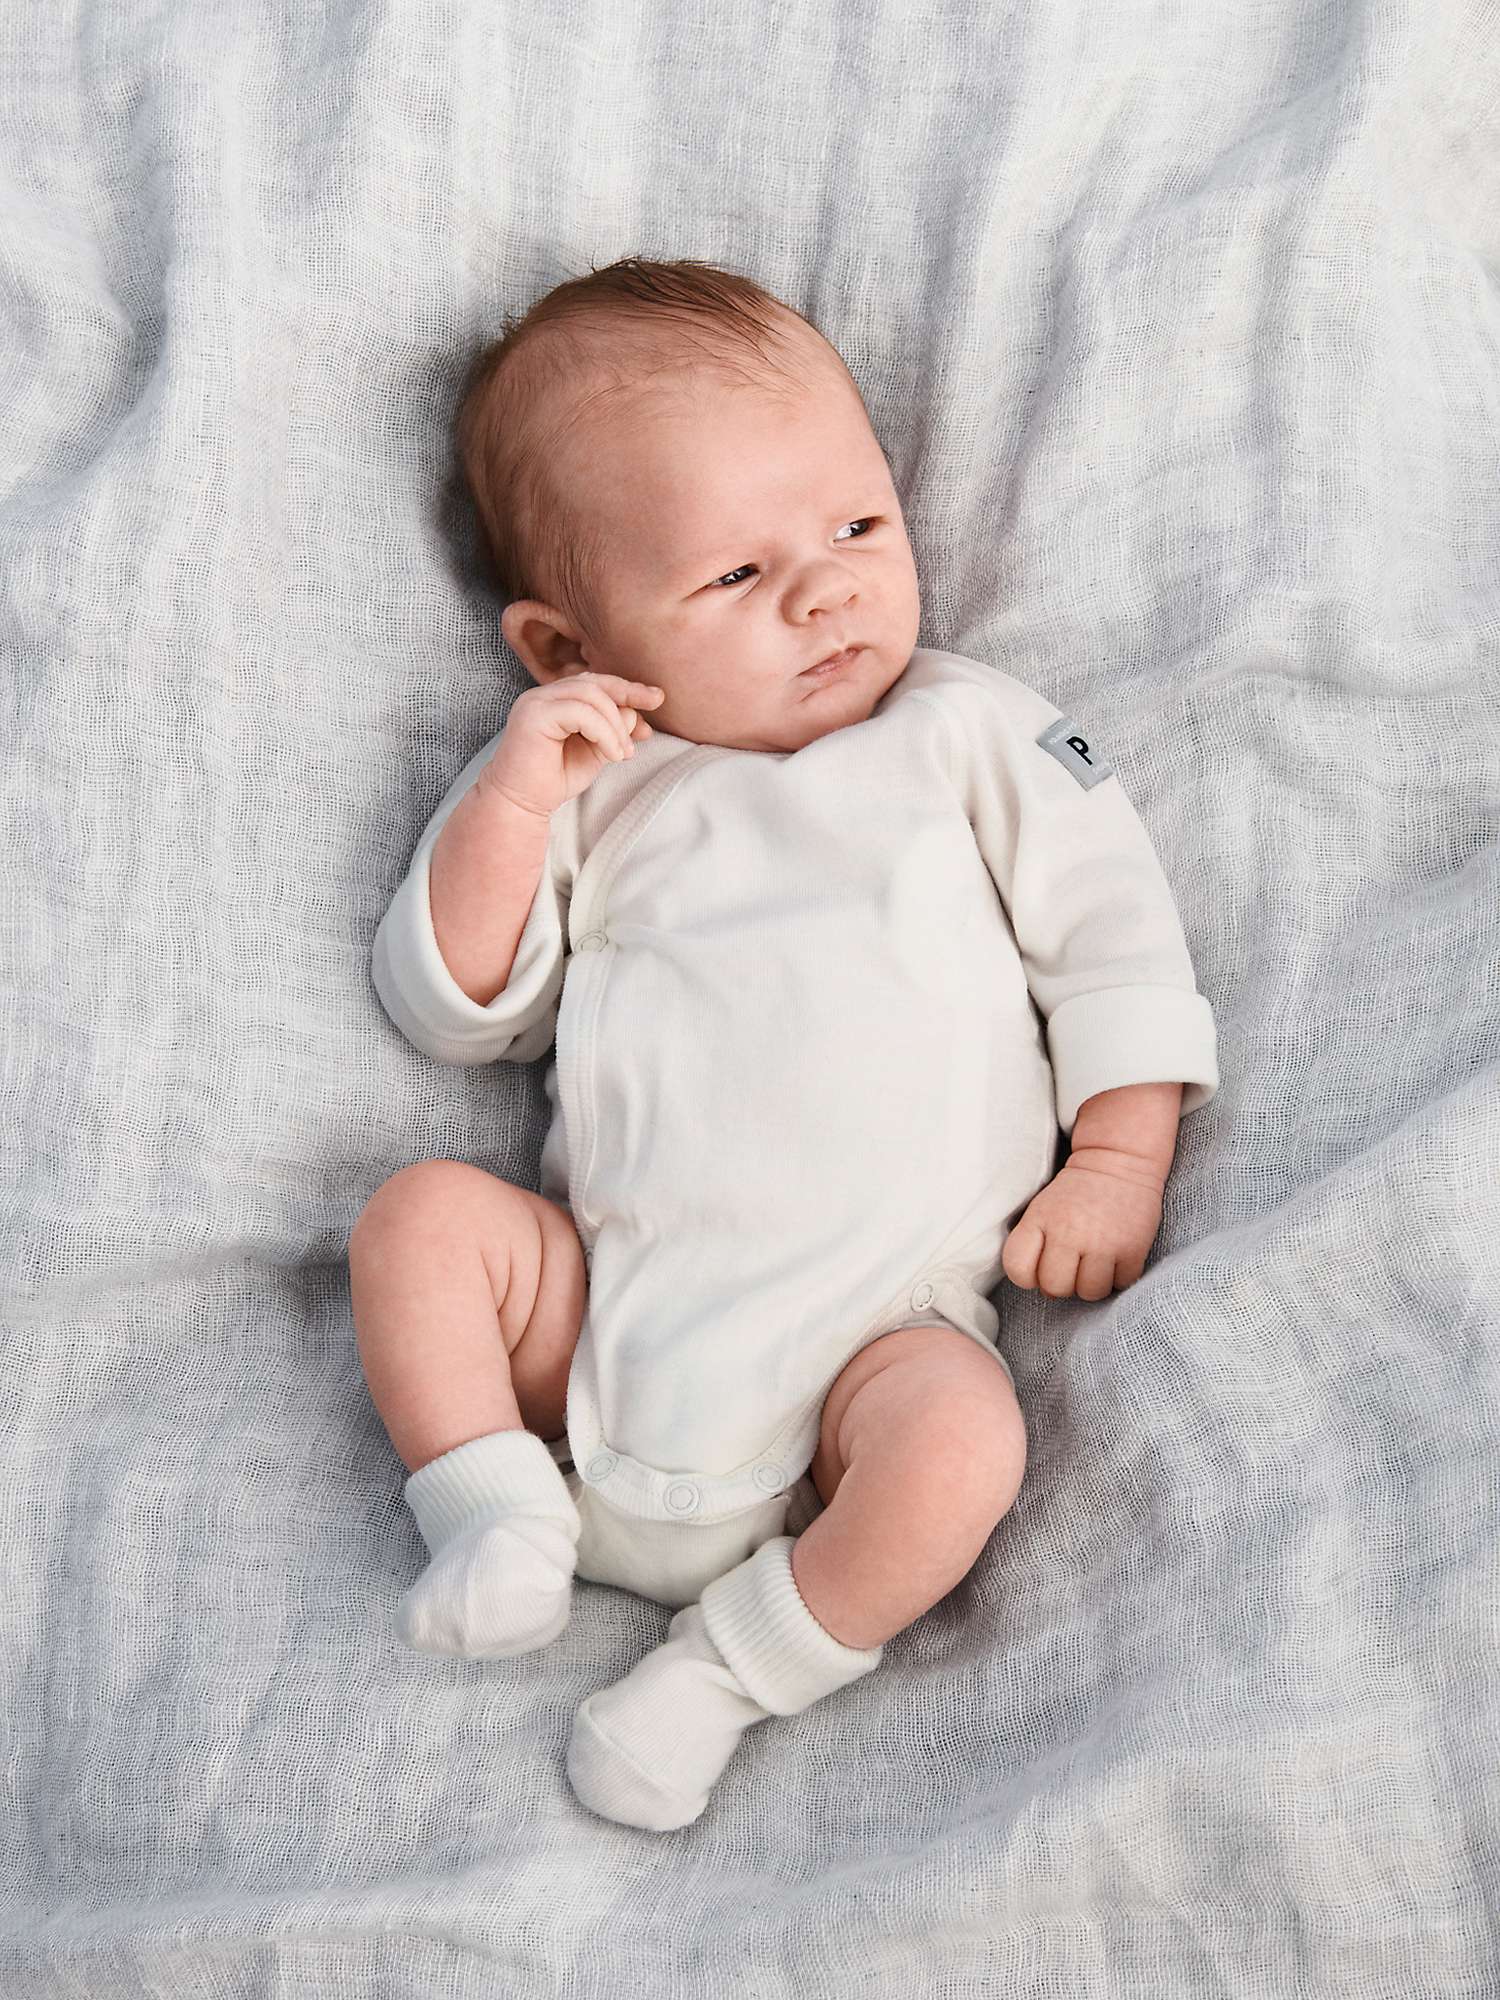 Buy Polarn O. Pyret Baby GOTS Organic Cotton Wraparound Bodysuit, White Online at johnlewis.com